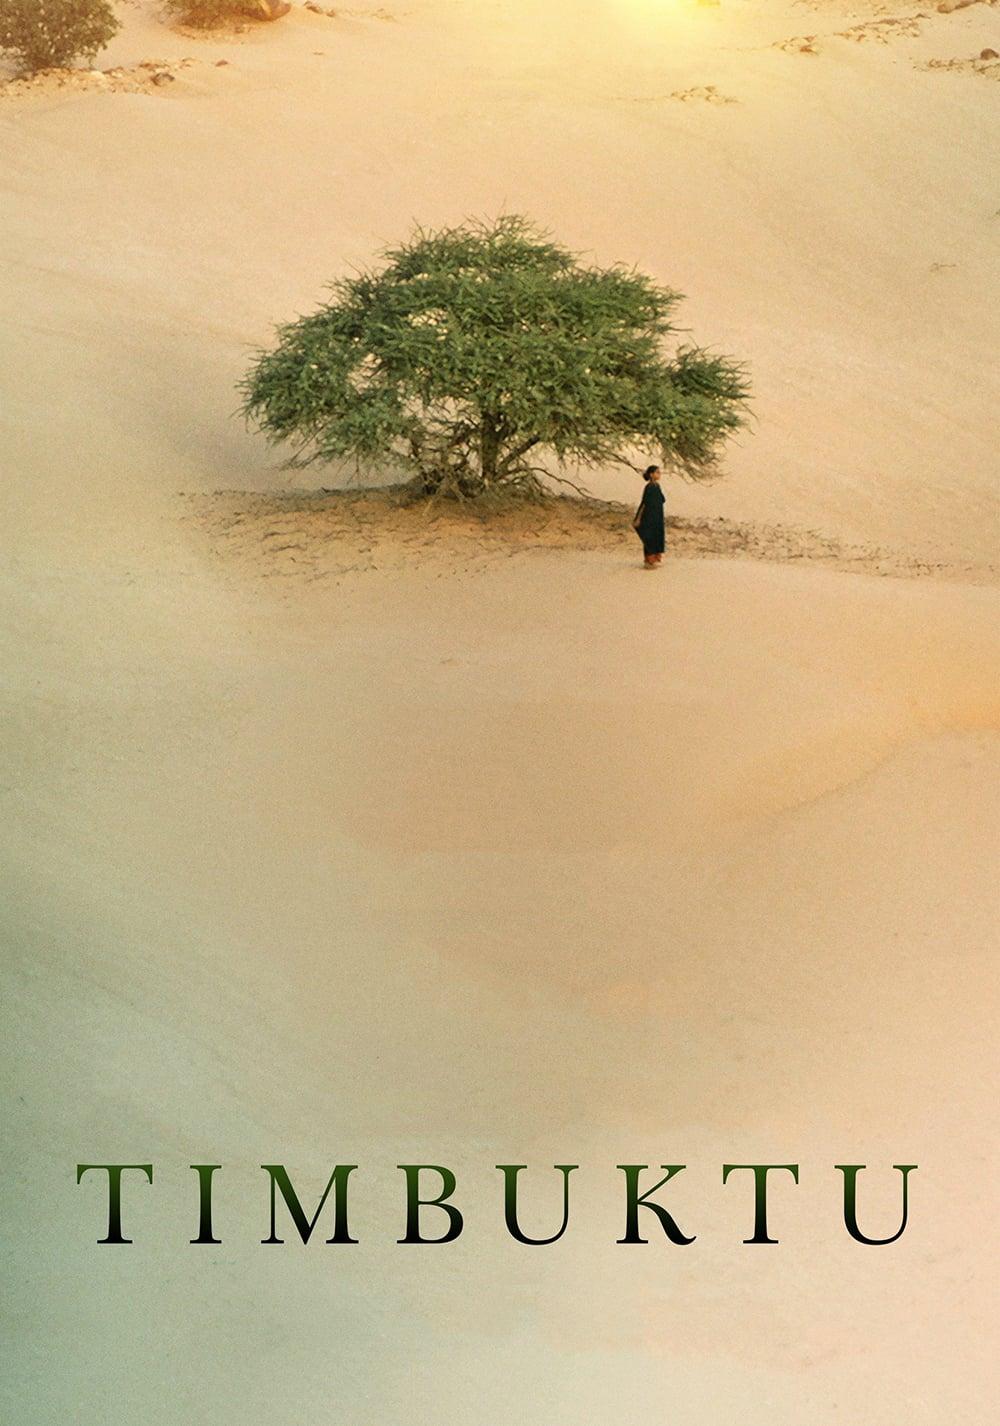 Timbuktu poster